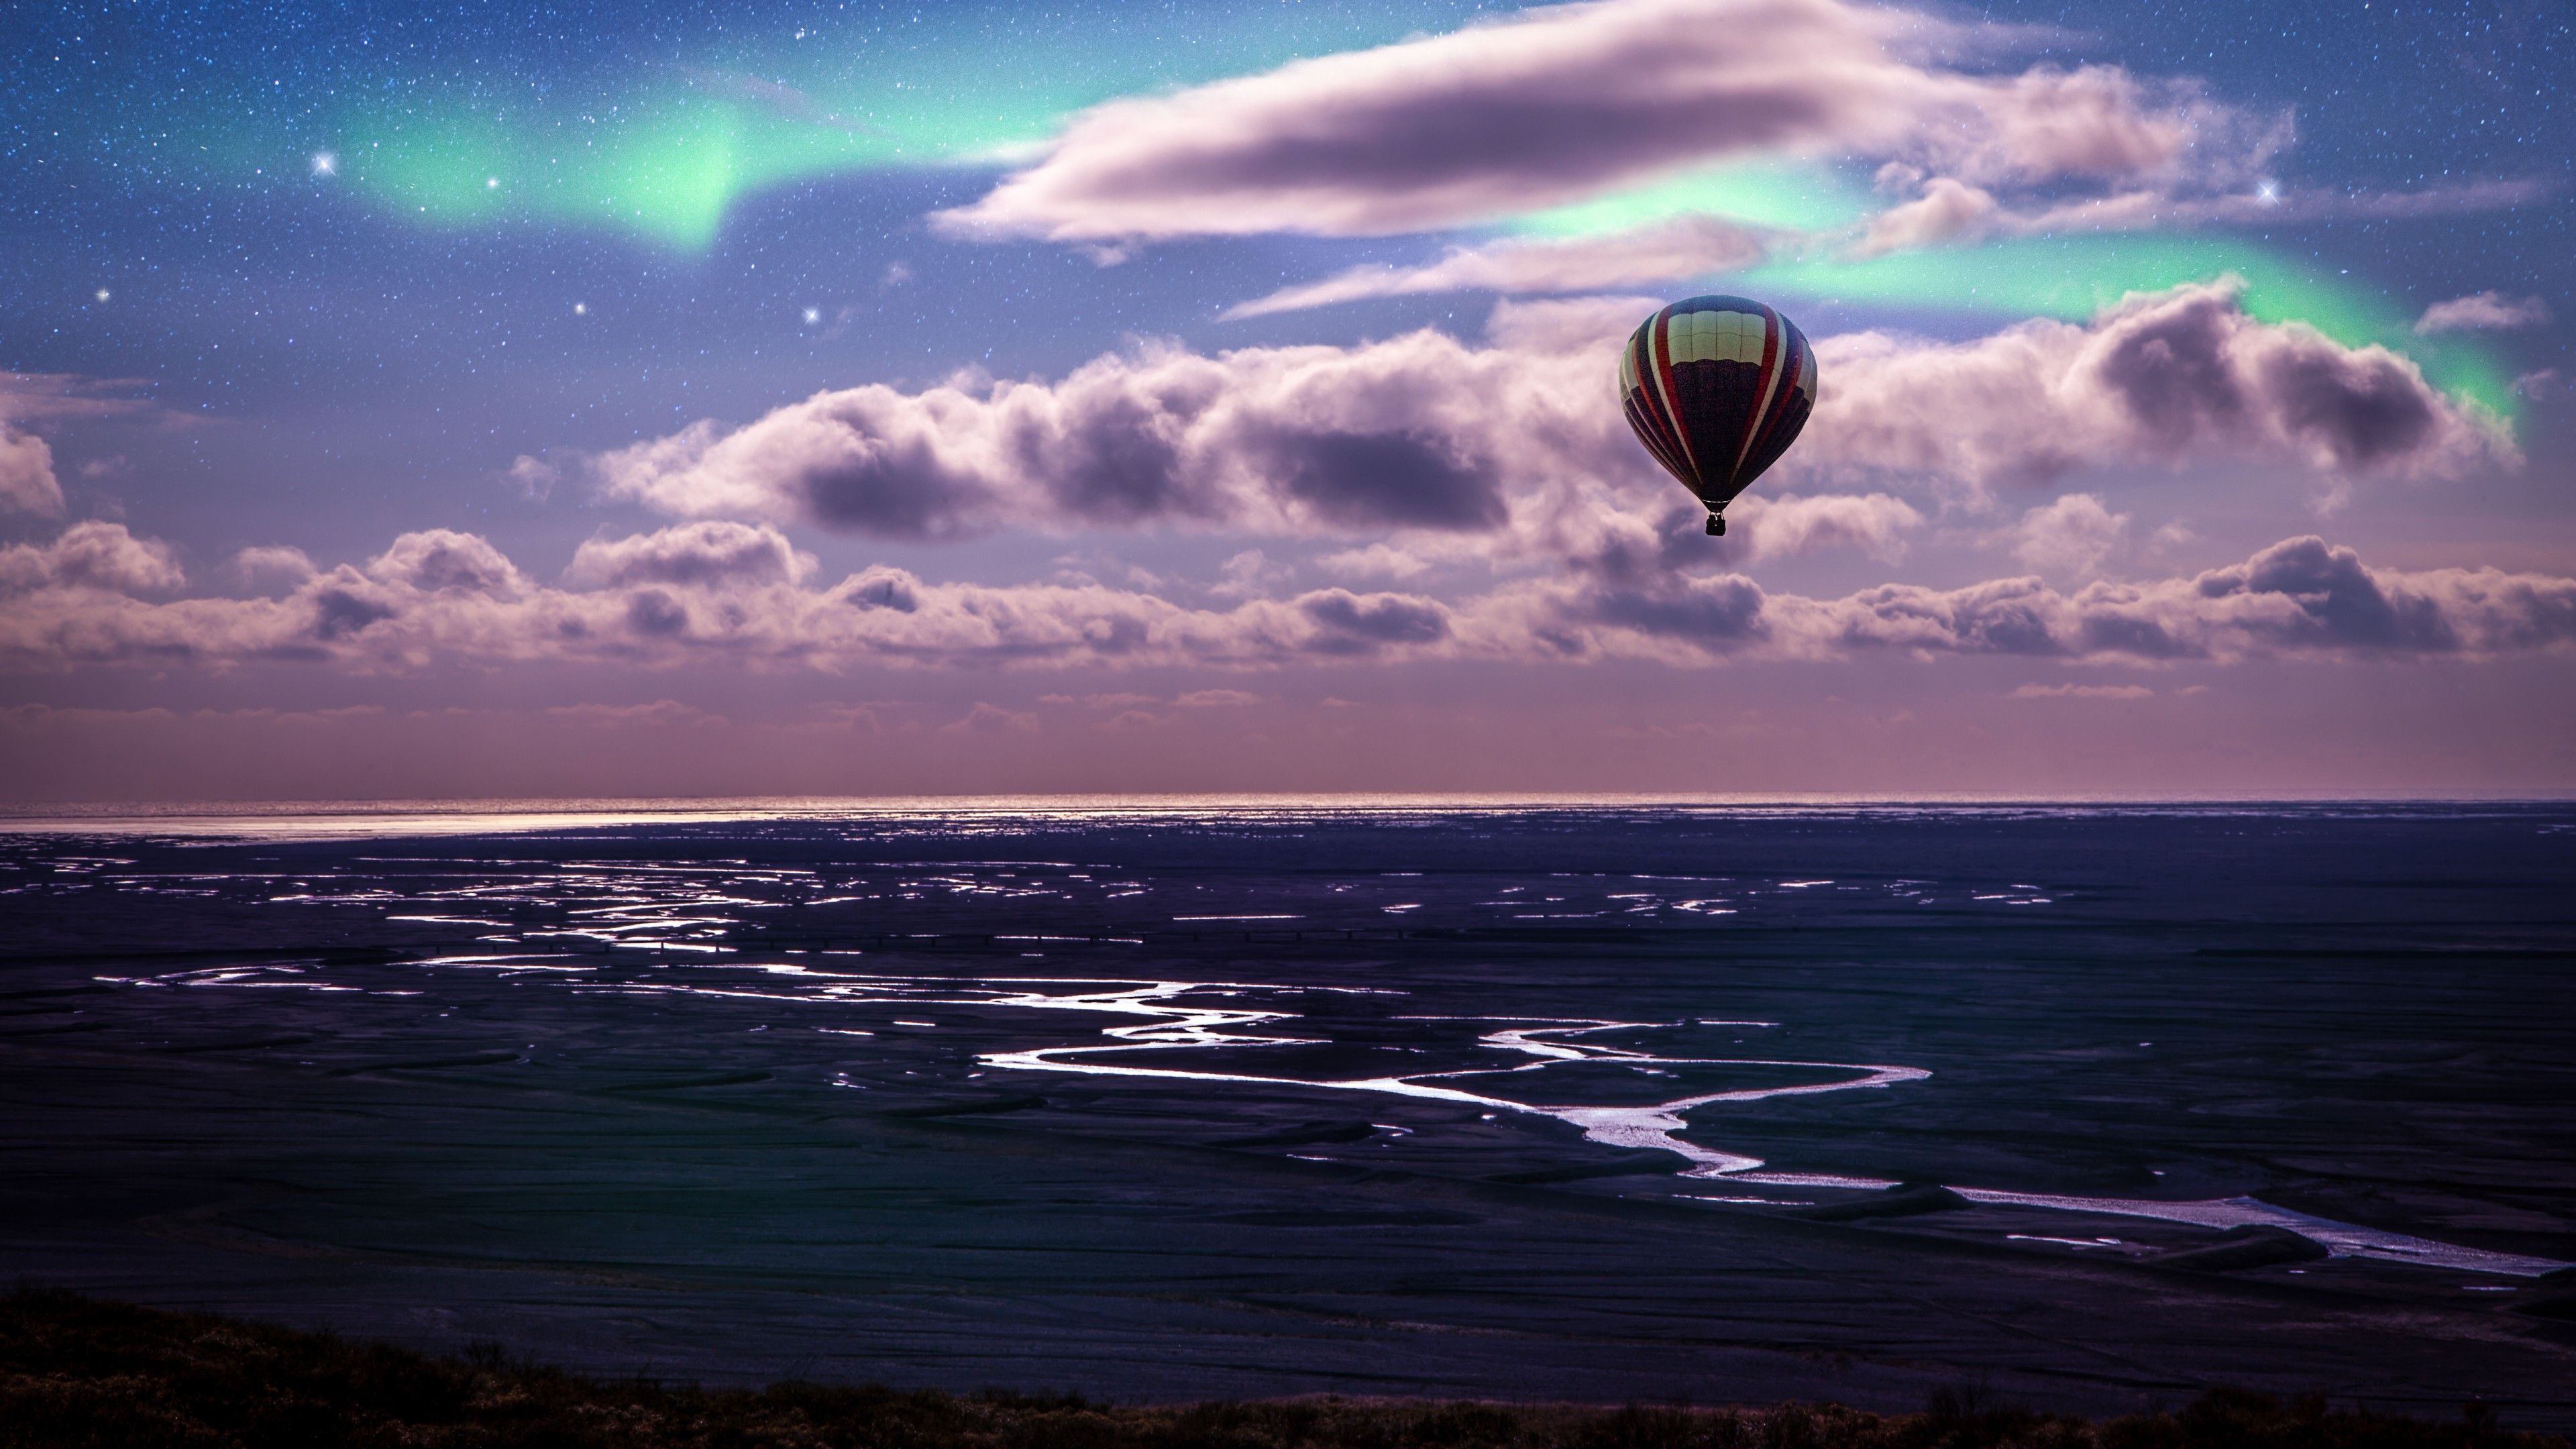 Hot air balloon 4K Wallpaper, Aurora Borealis, Northern Lights, Clouds, Landscape, Dusk, Starry sky, 5K, Nature